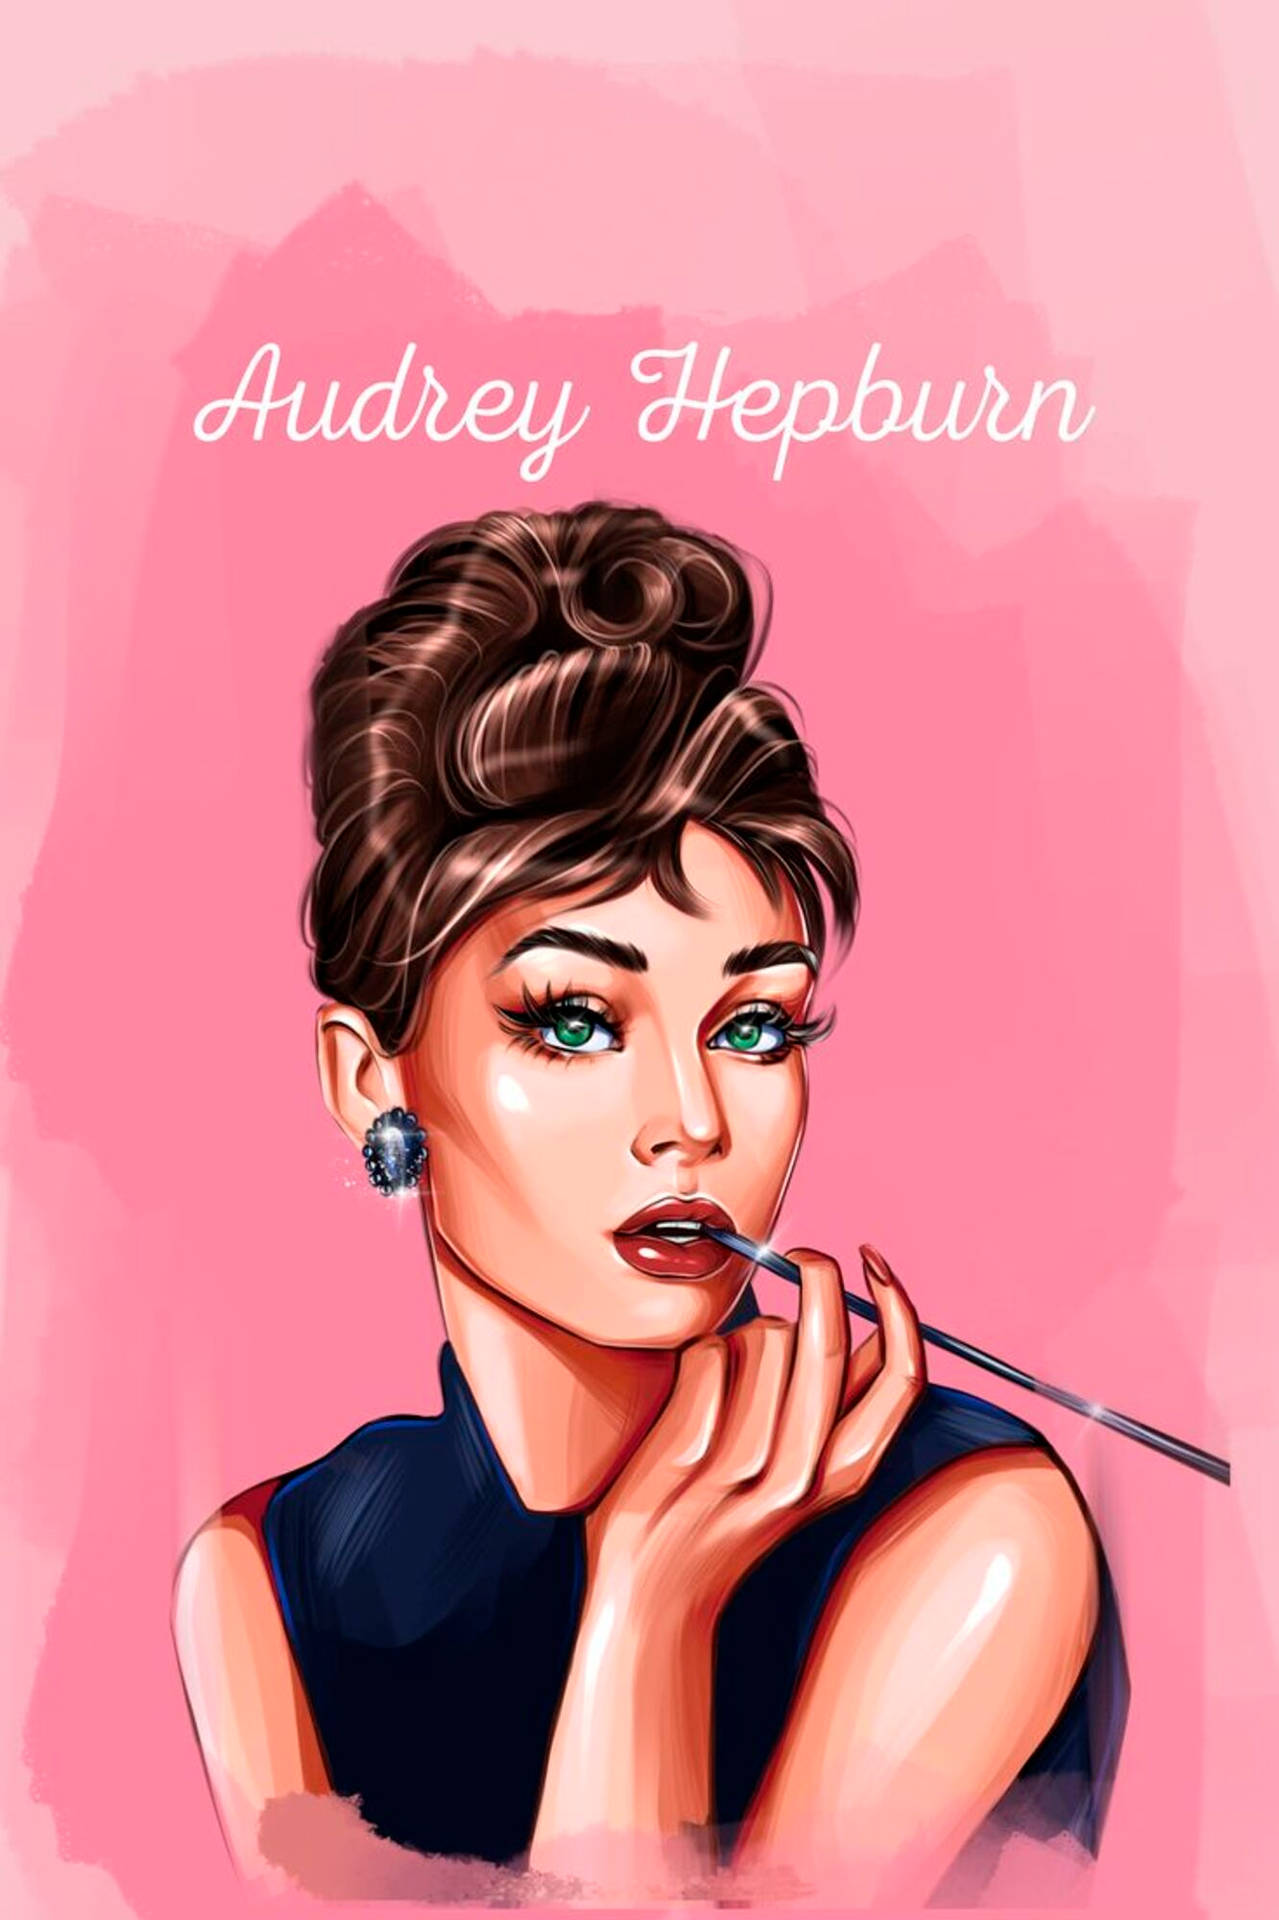 Audrey Hepburn Digital Art Wallpaper